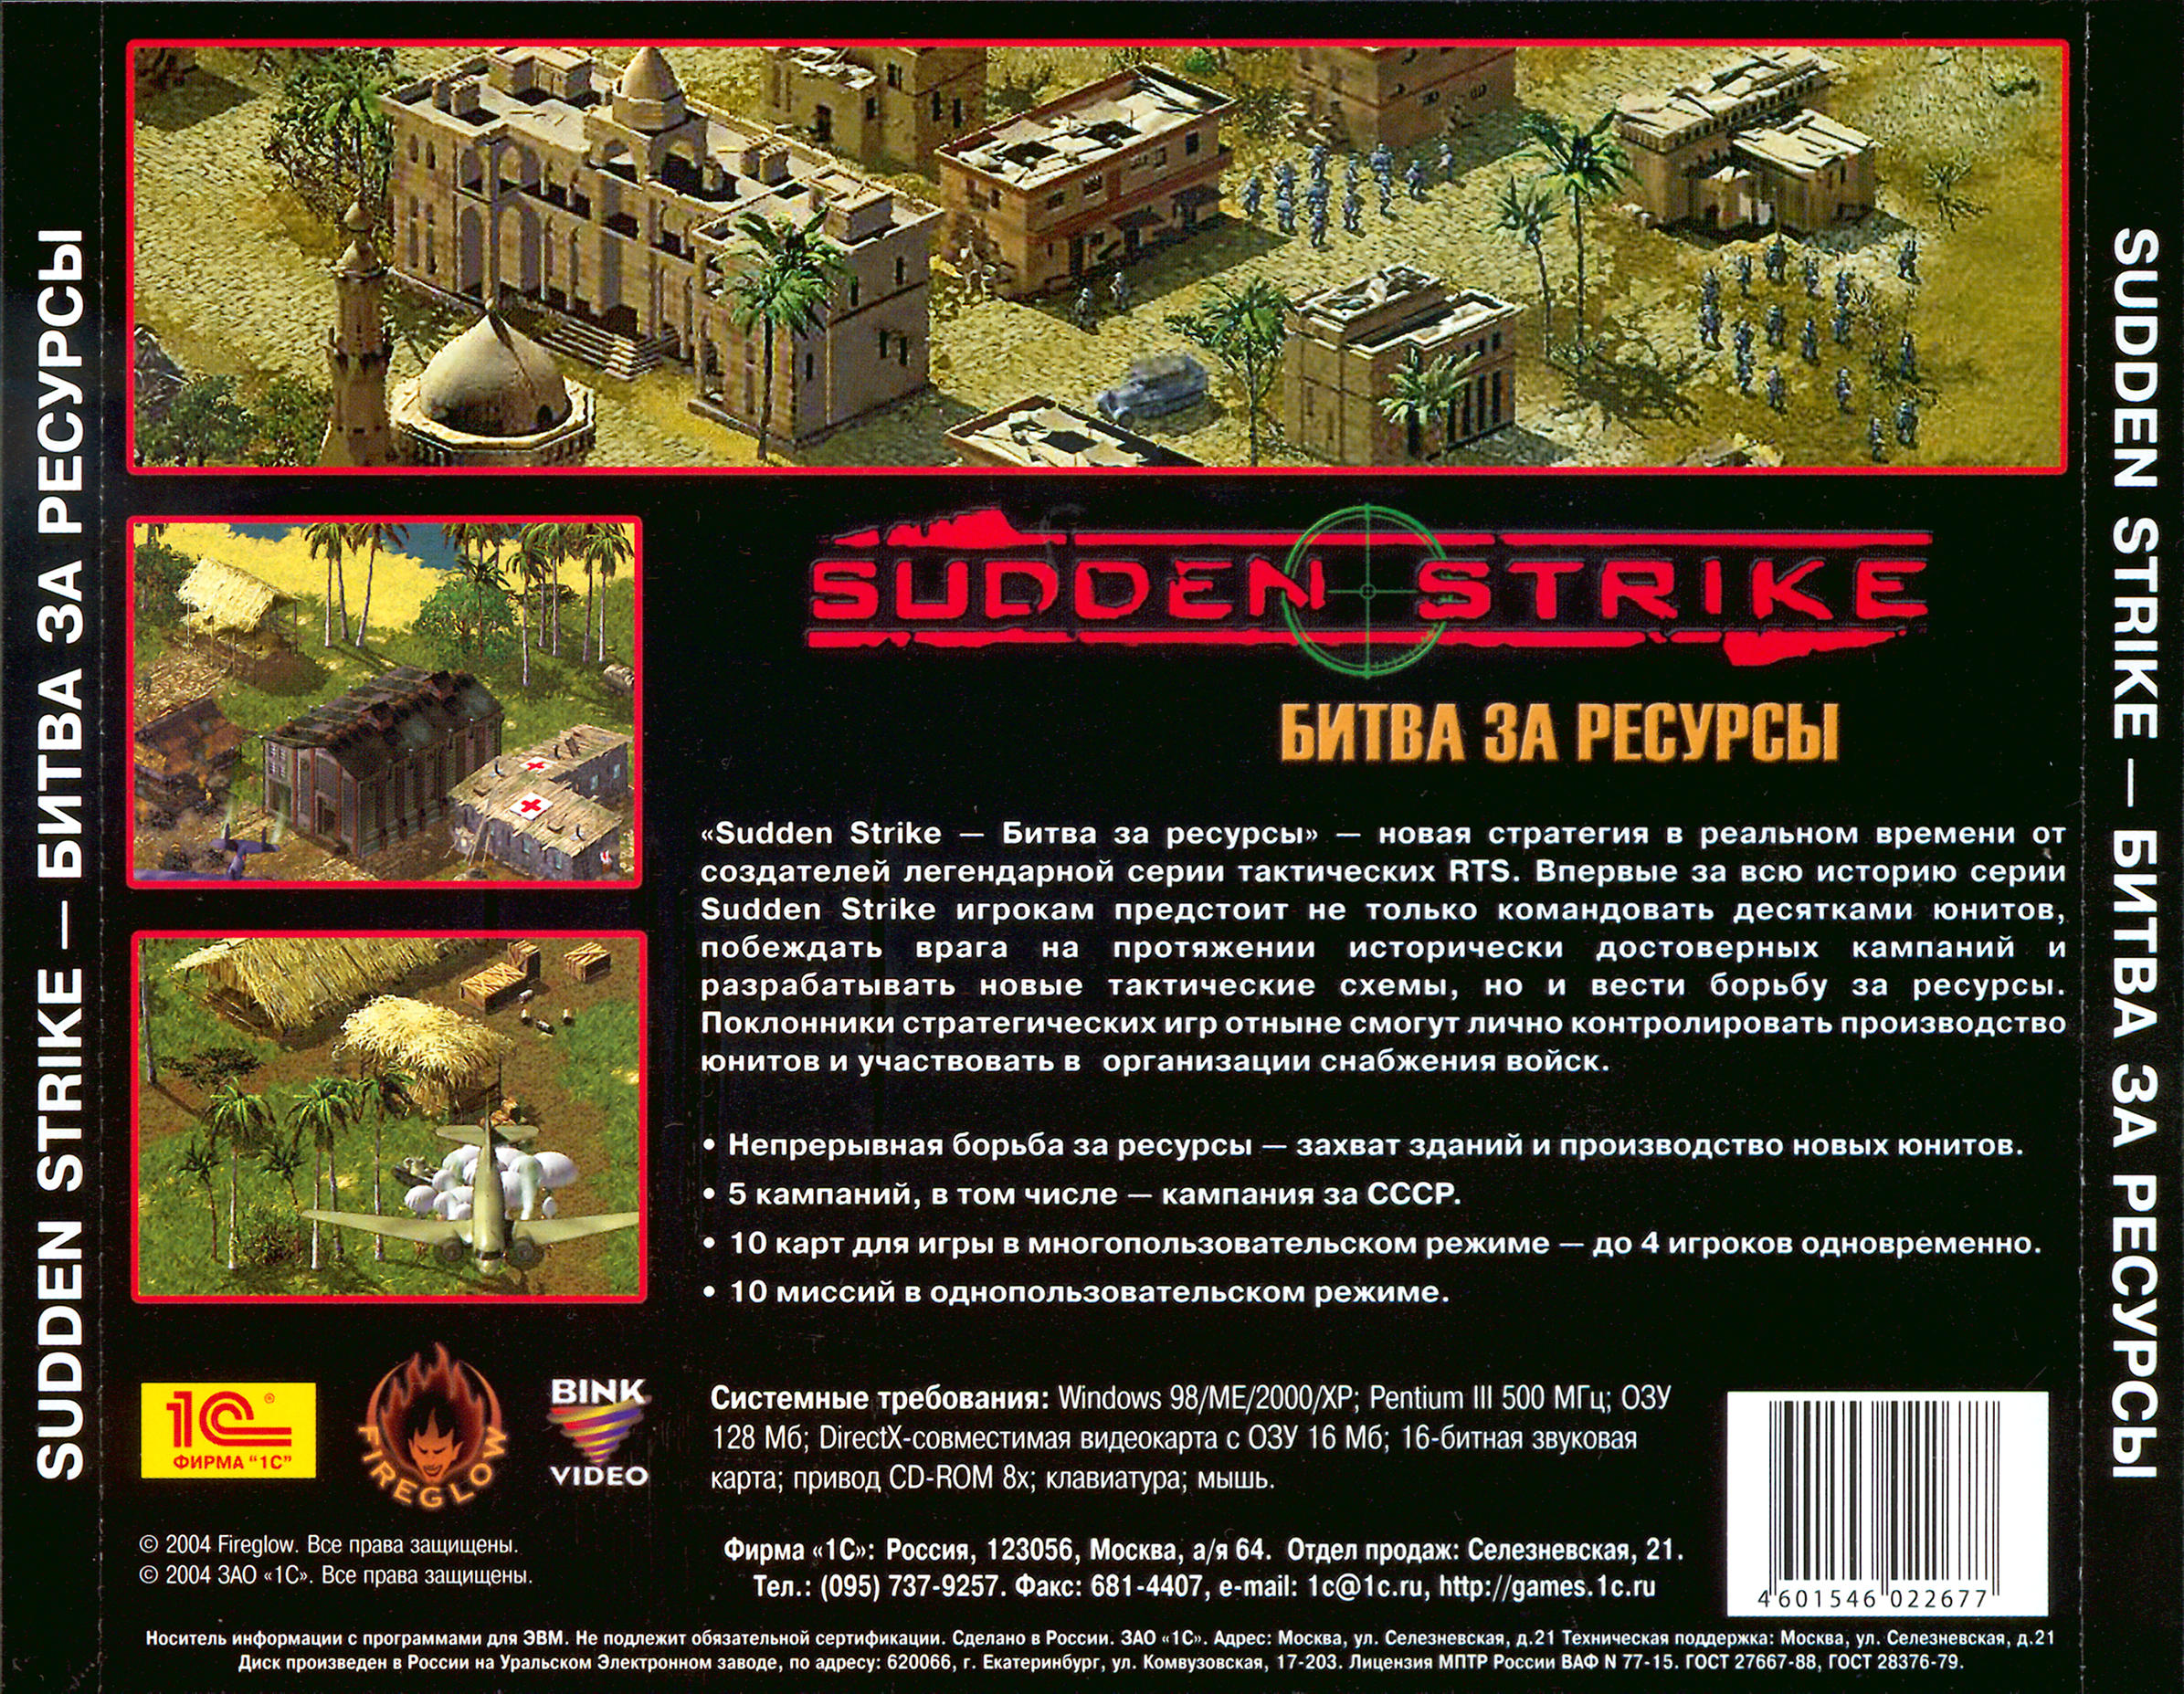 Захват ресурсов. Sudden Strike: битва за ресурсы. Битва за ресурсы книга.